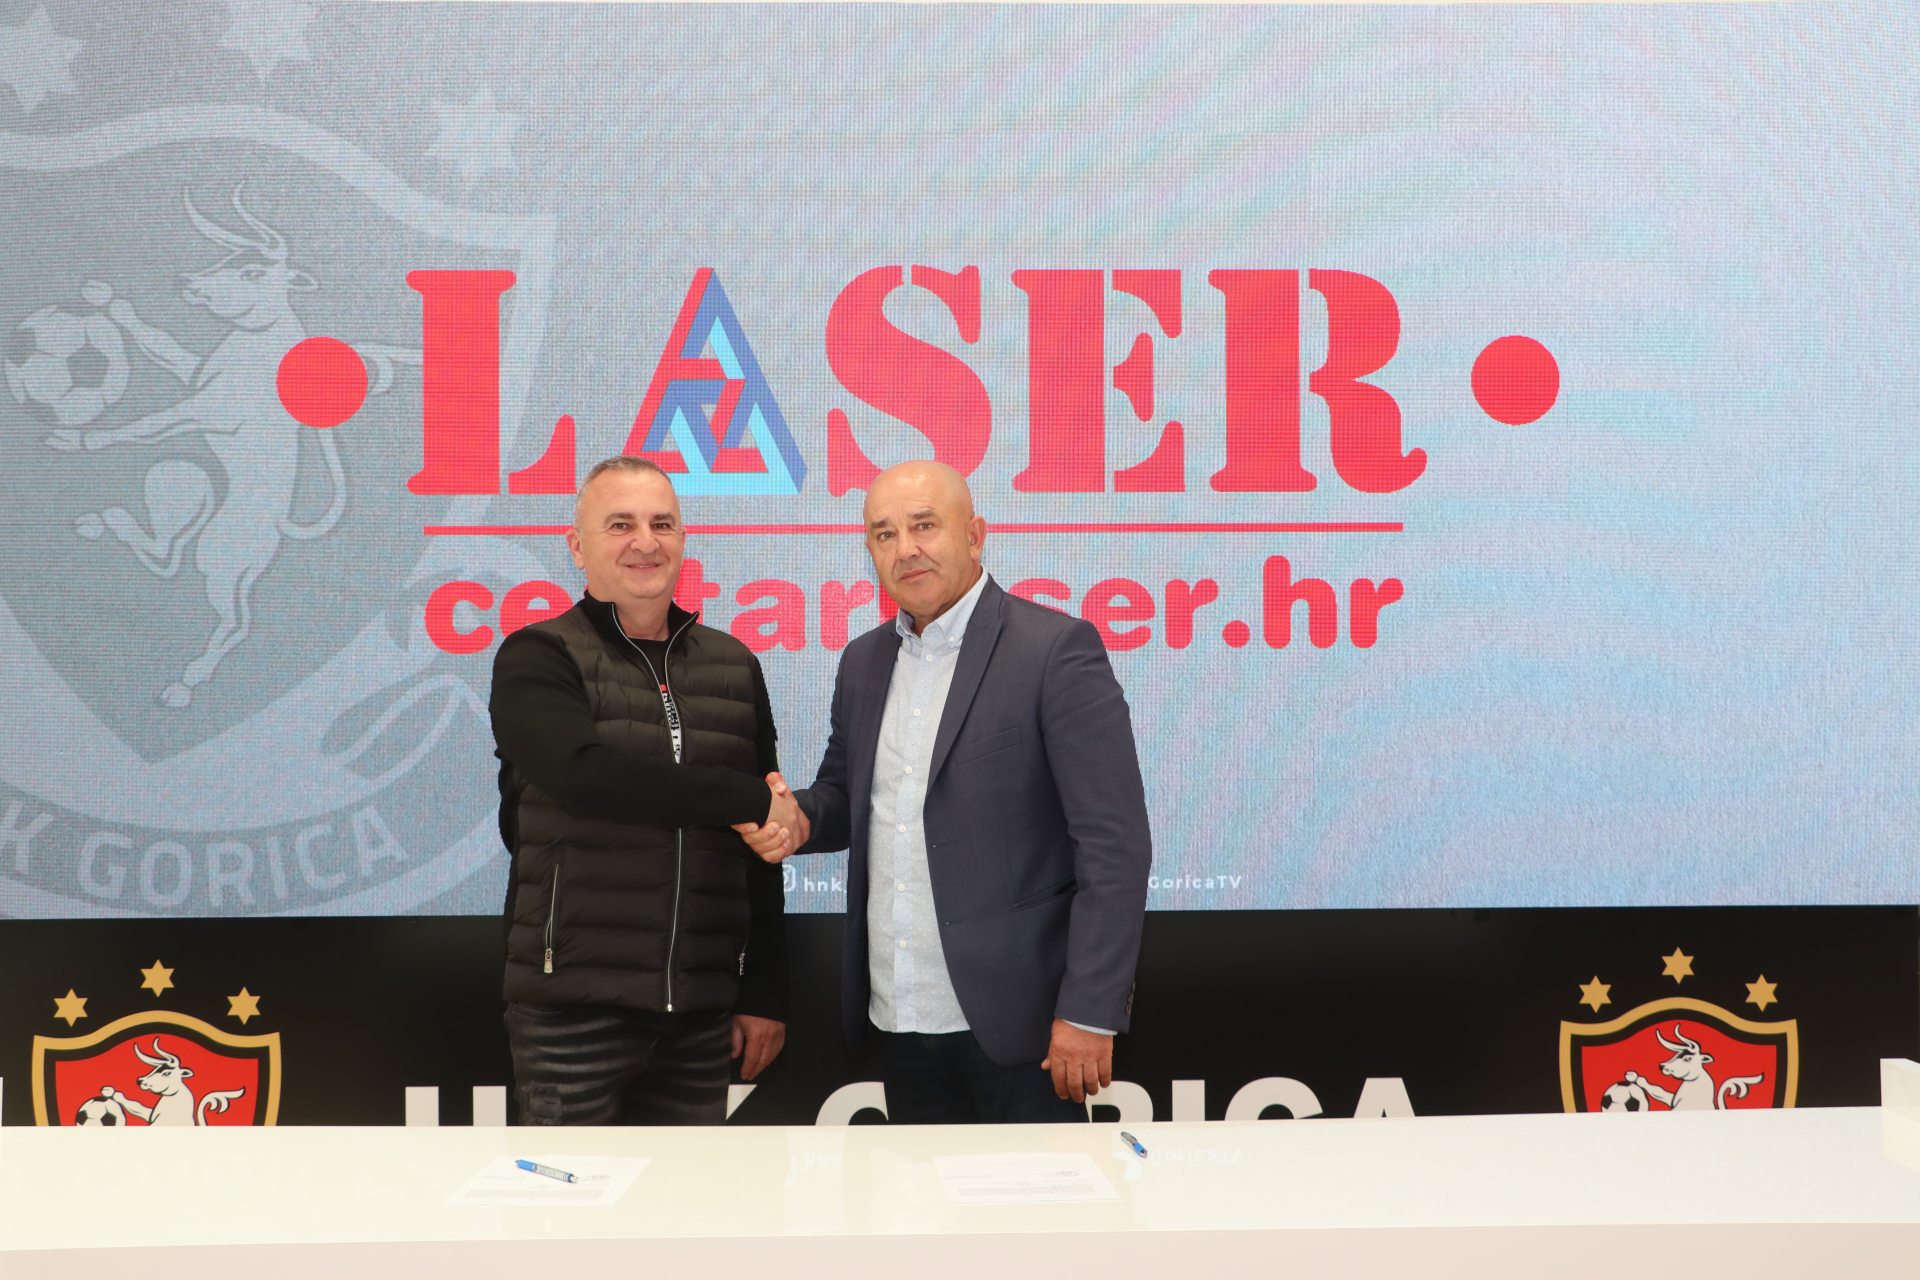 Laser d.o.o. novi sponzor HNK Gorice